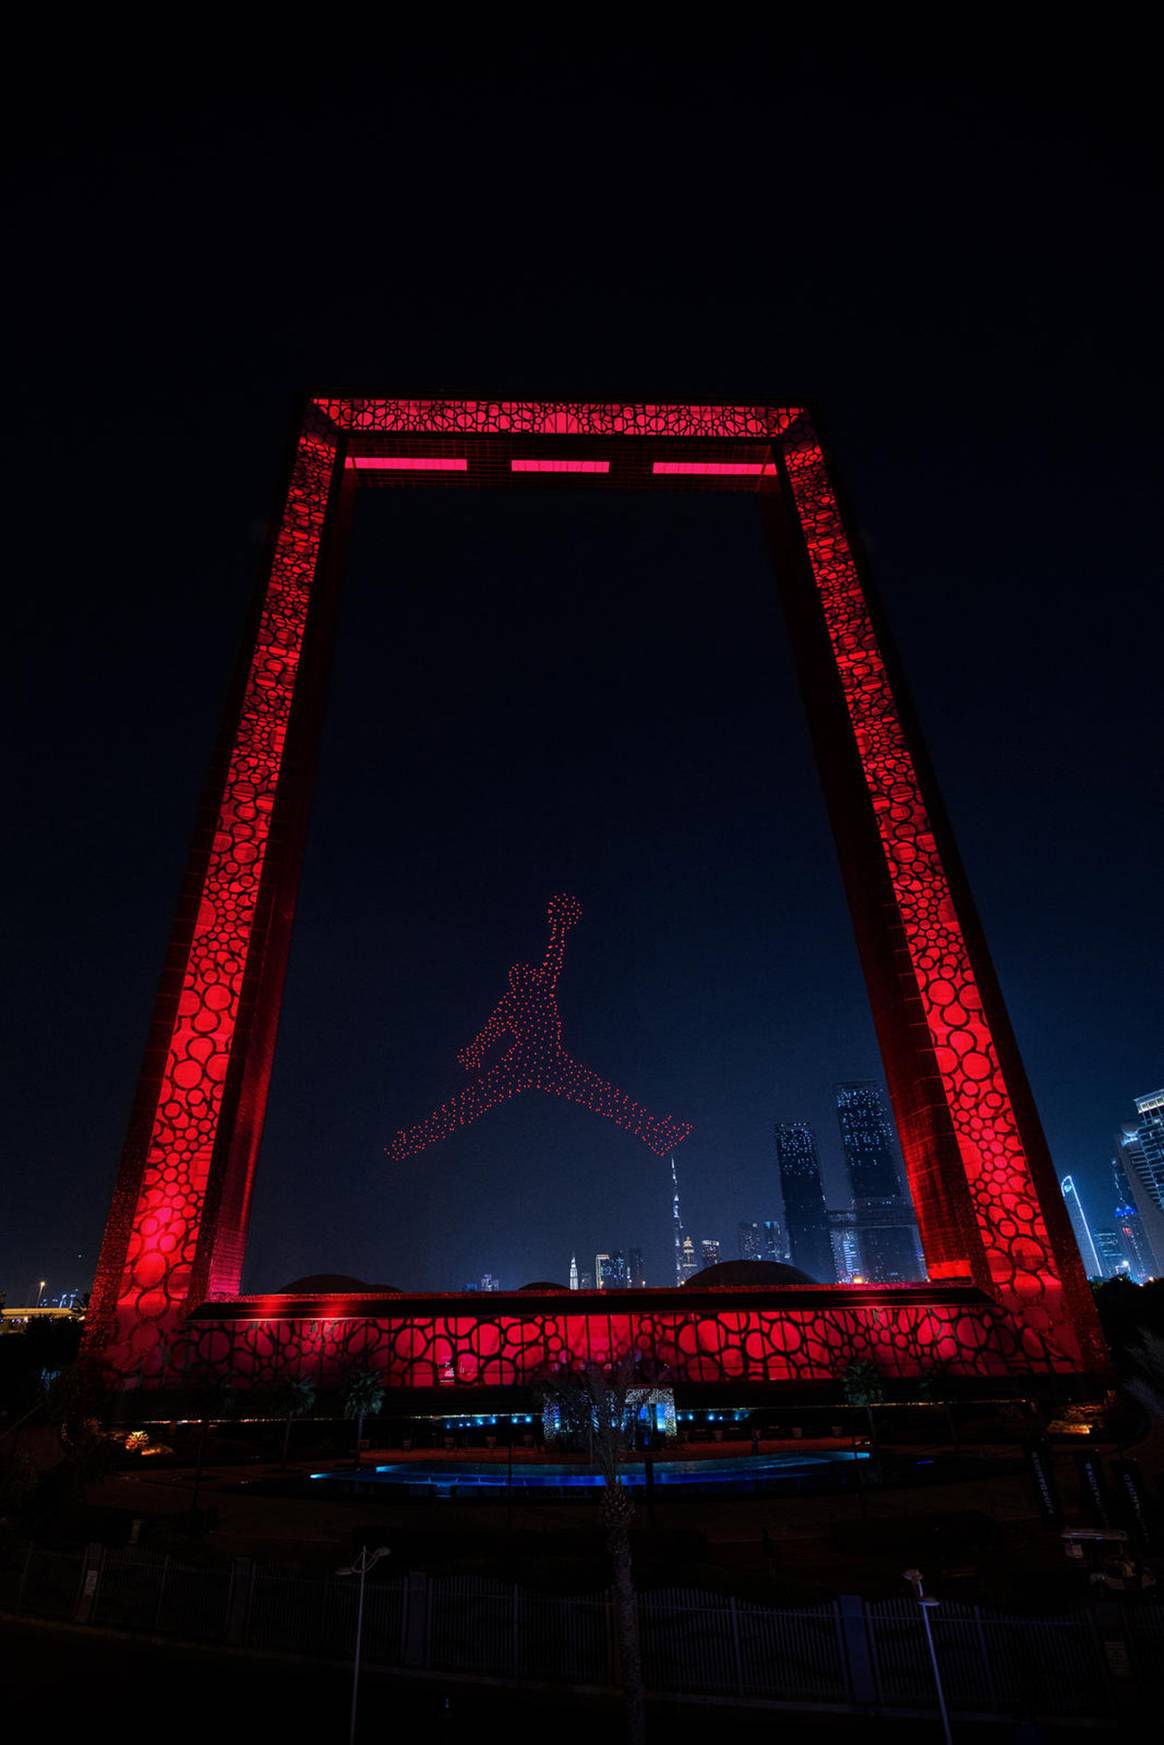 Photo Credits: Nike, proyección del “Jumpman” de Jordan en el Dubái Frame.